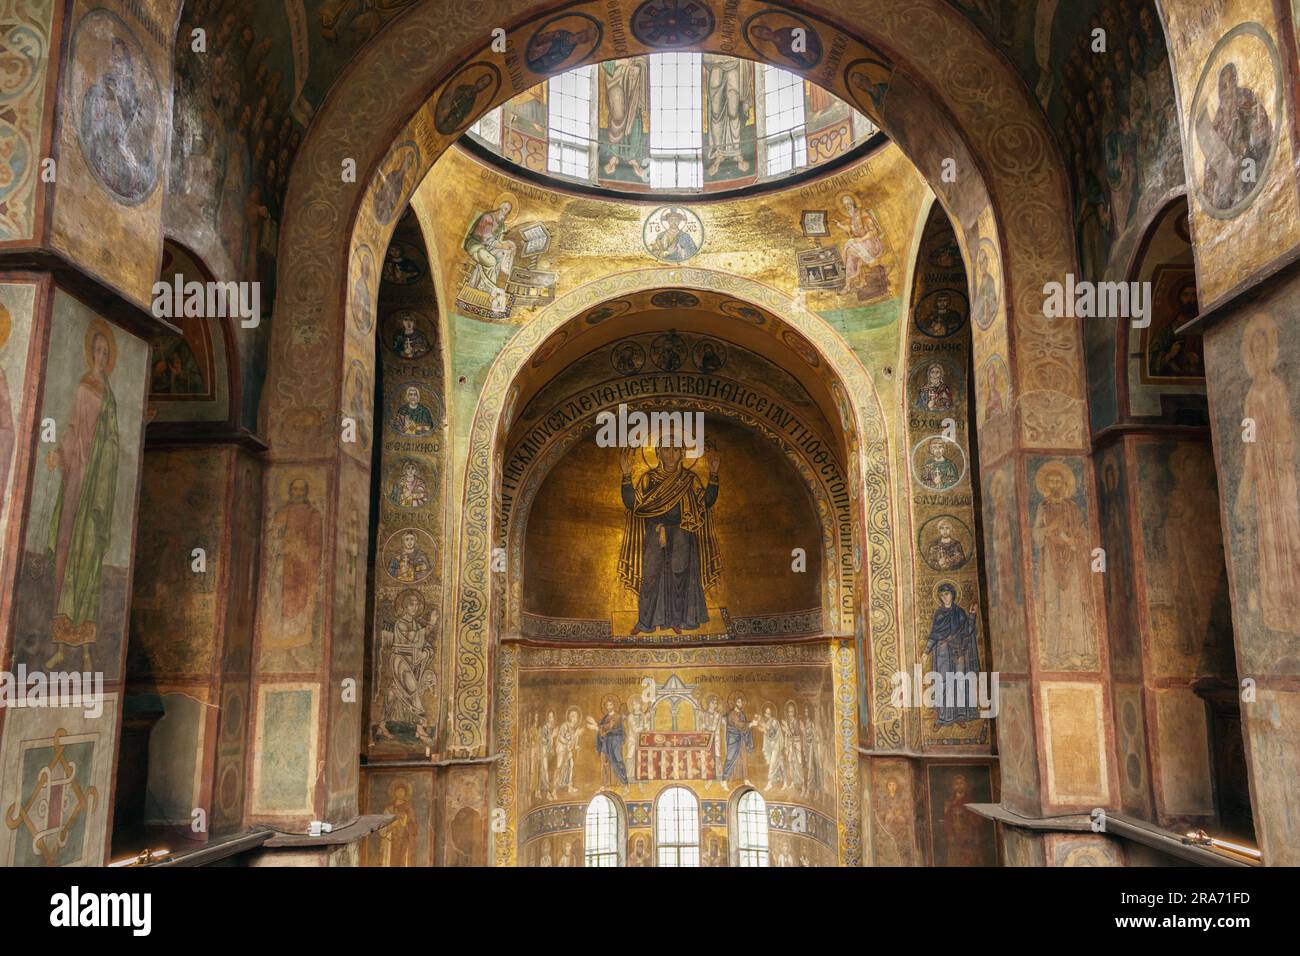 Ukraine, Kiew - 05 25 2023: St. Sophia-Kirche im Inneren. Goldenes Mosaik der Jungfrau Maria. Alte christliche Kathedrale. Freske und Bogen der Hagia Sophia. Stockfoto